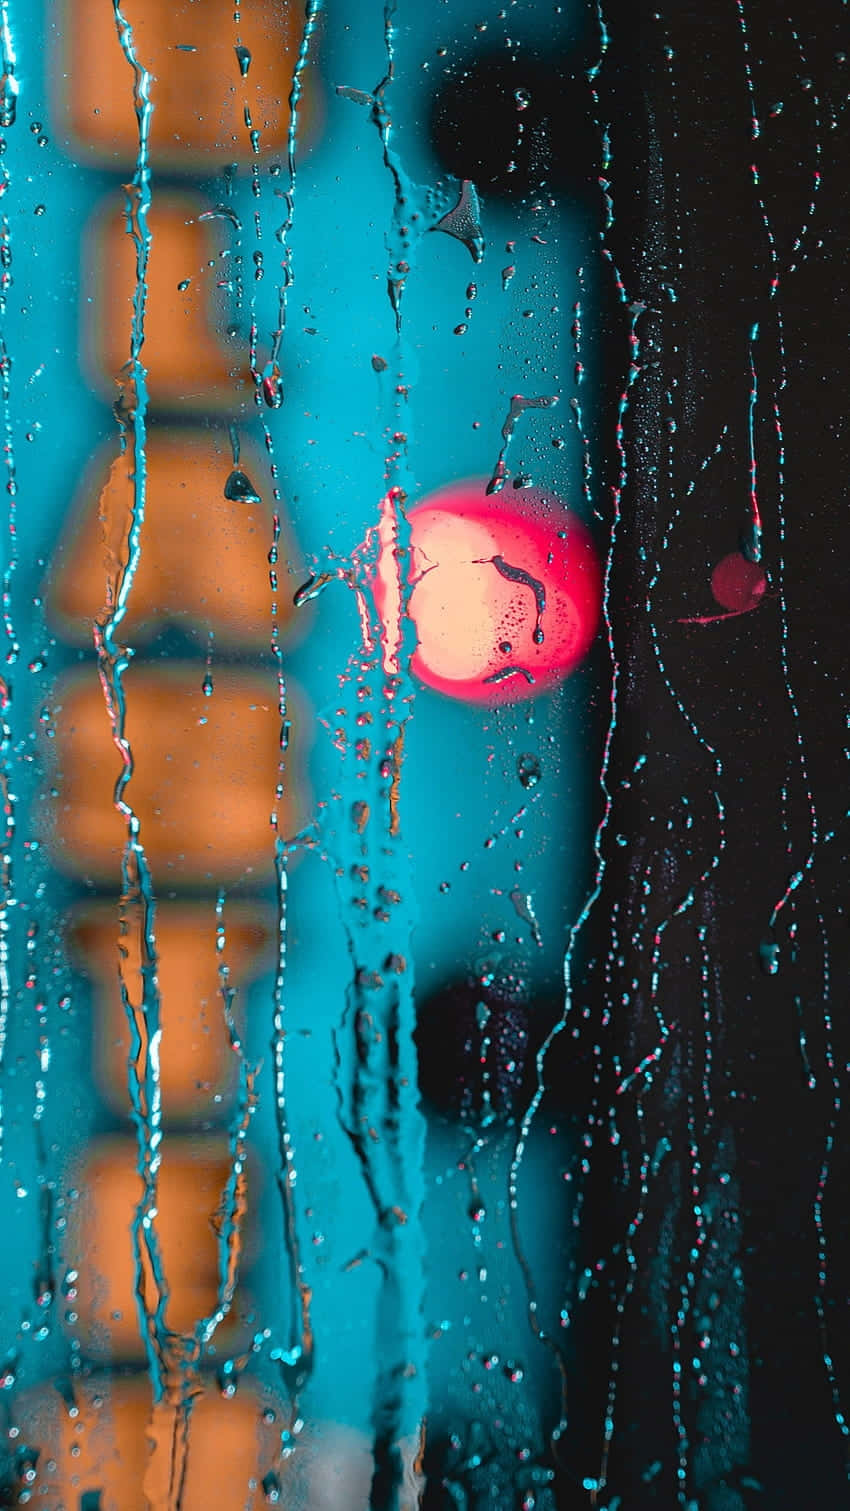 Rainy Window Abstract Lights Wallpaper